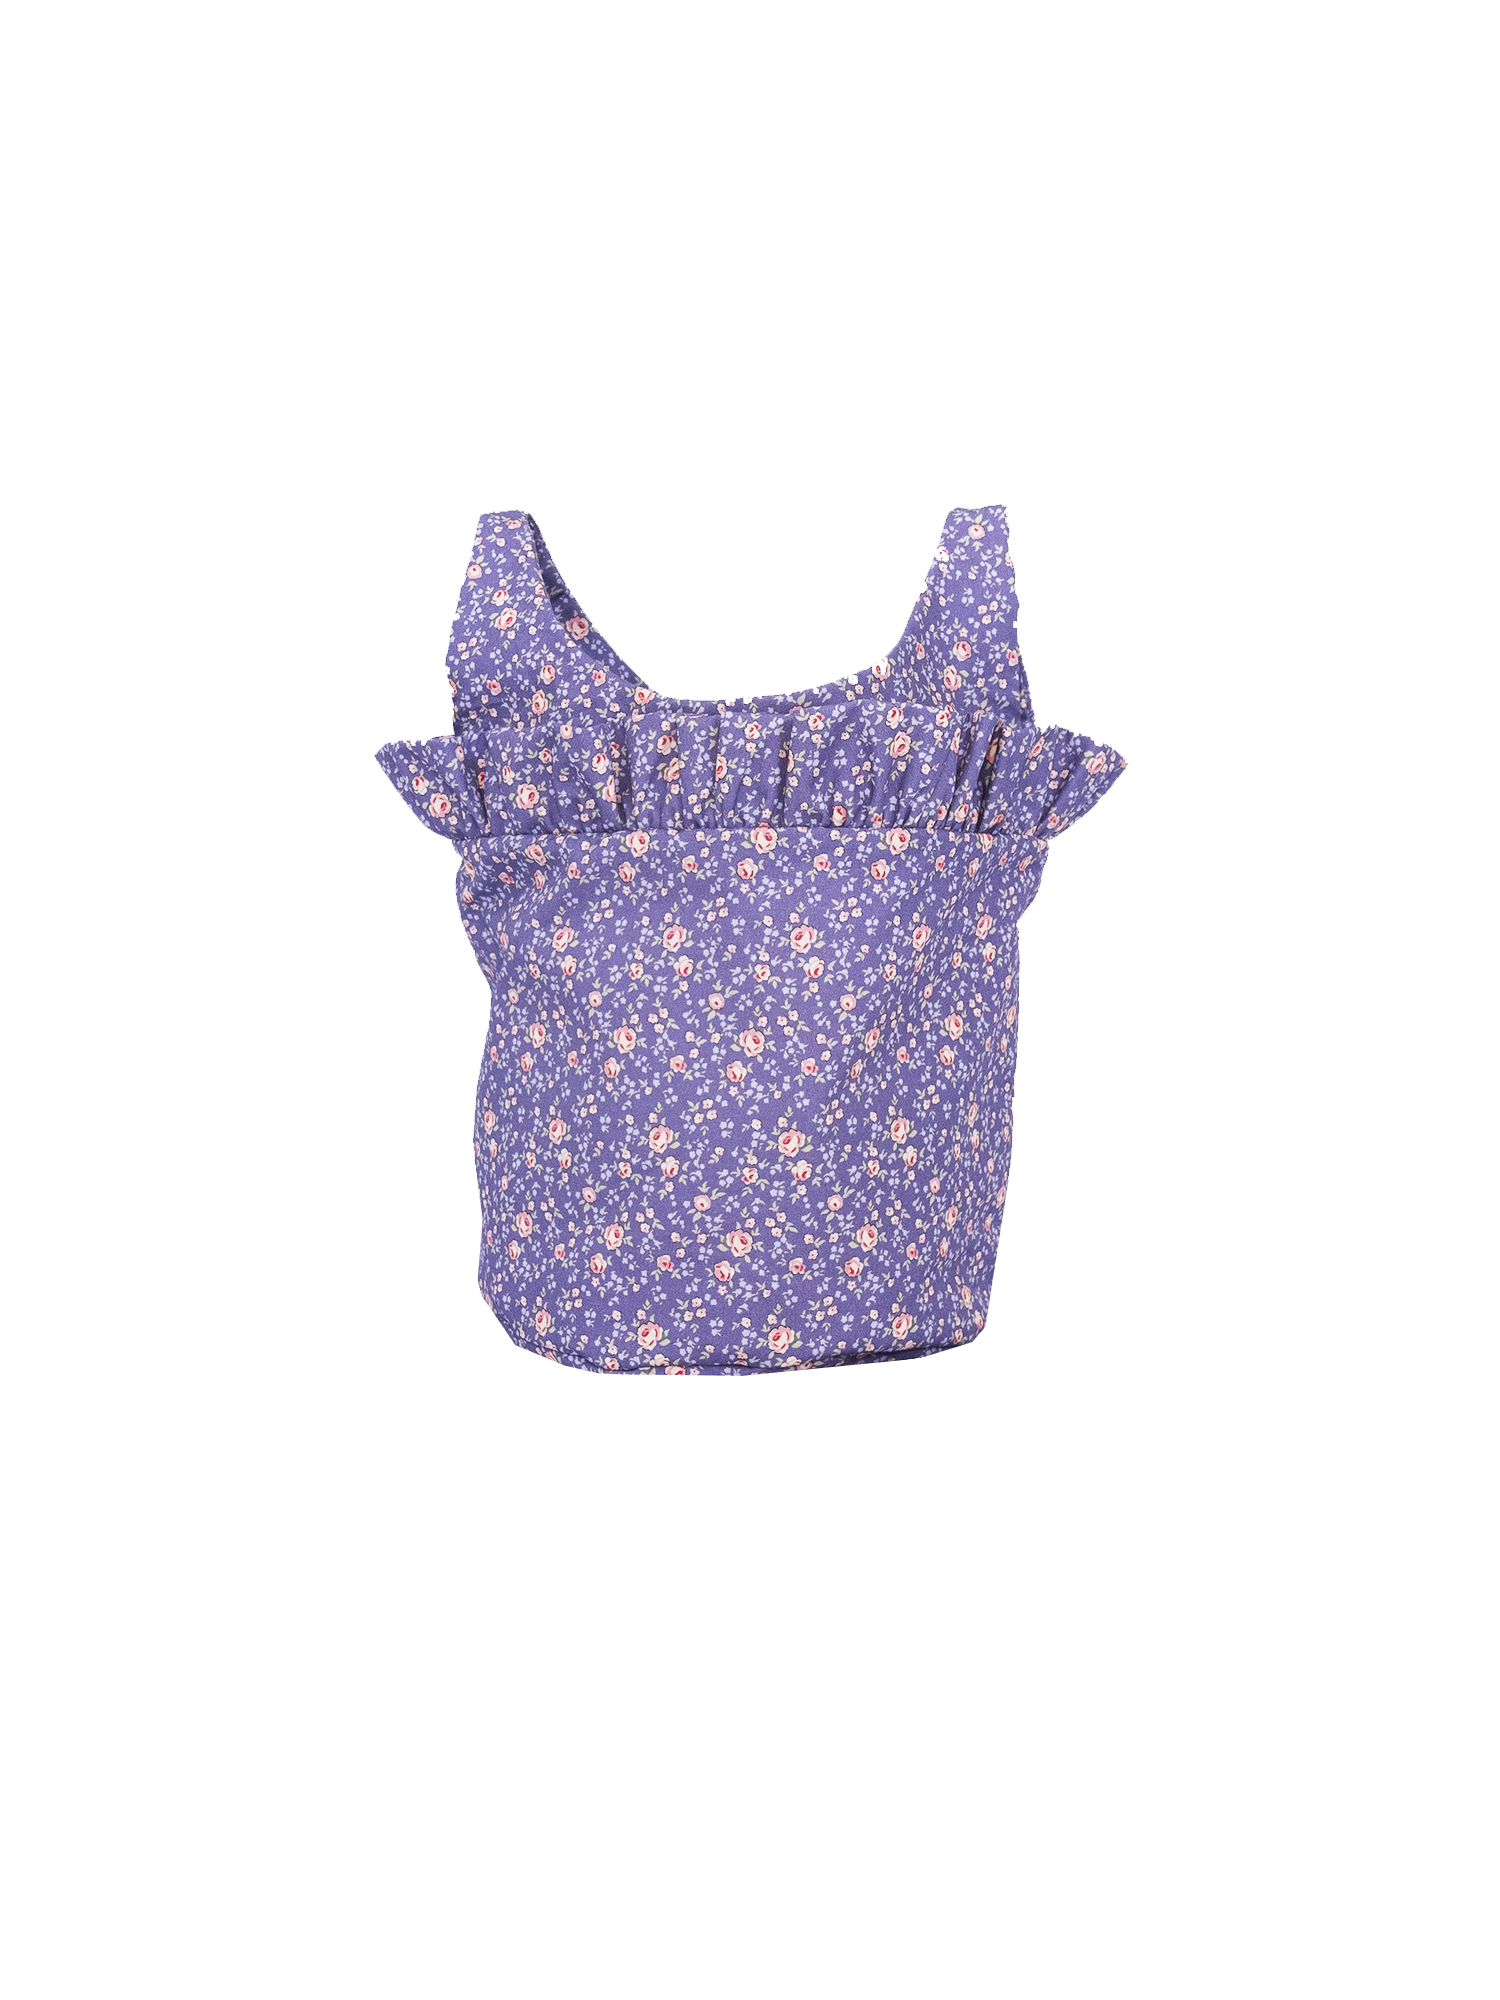 JASMINE - bucket bag with shoulder strap in cotton Versailles print